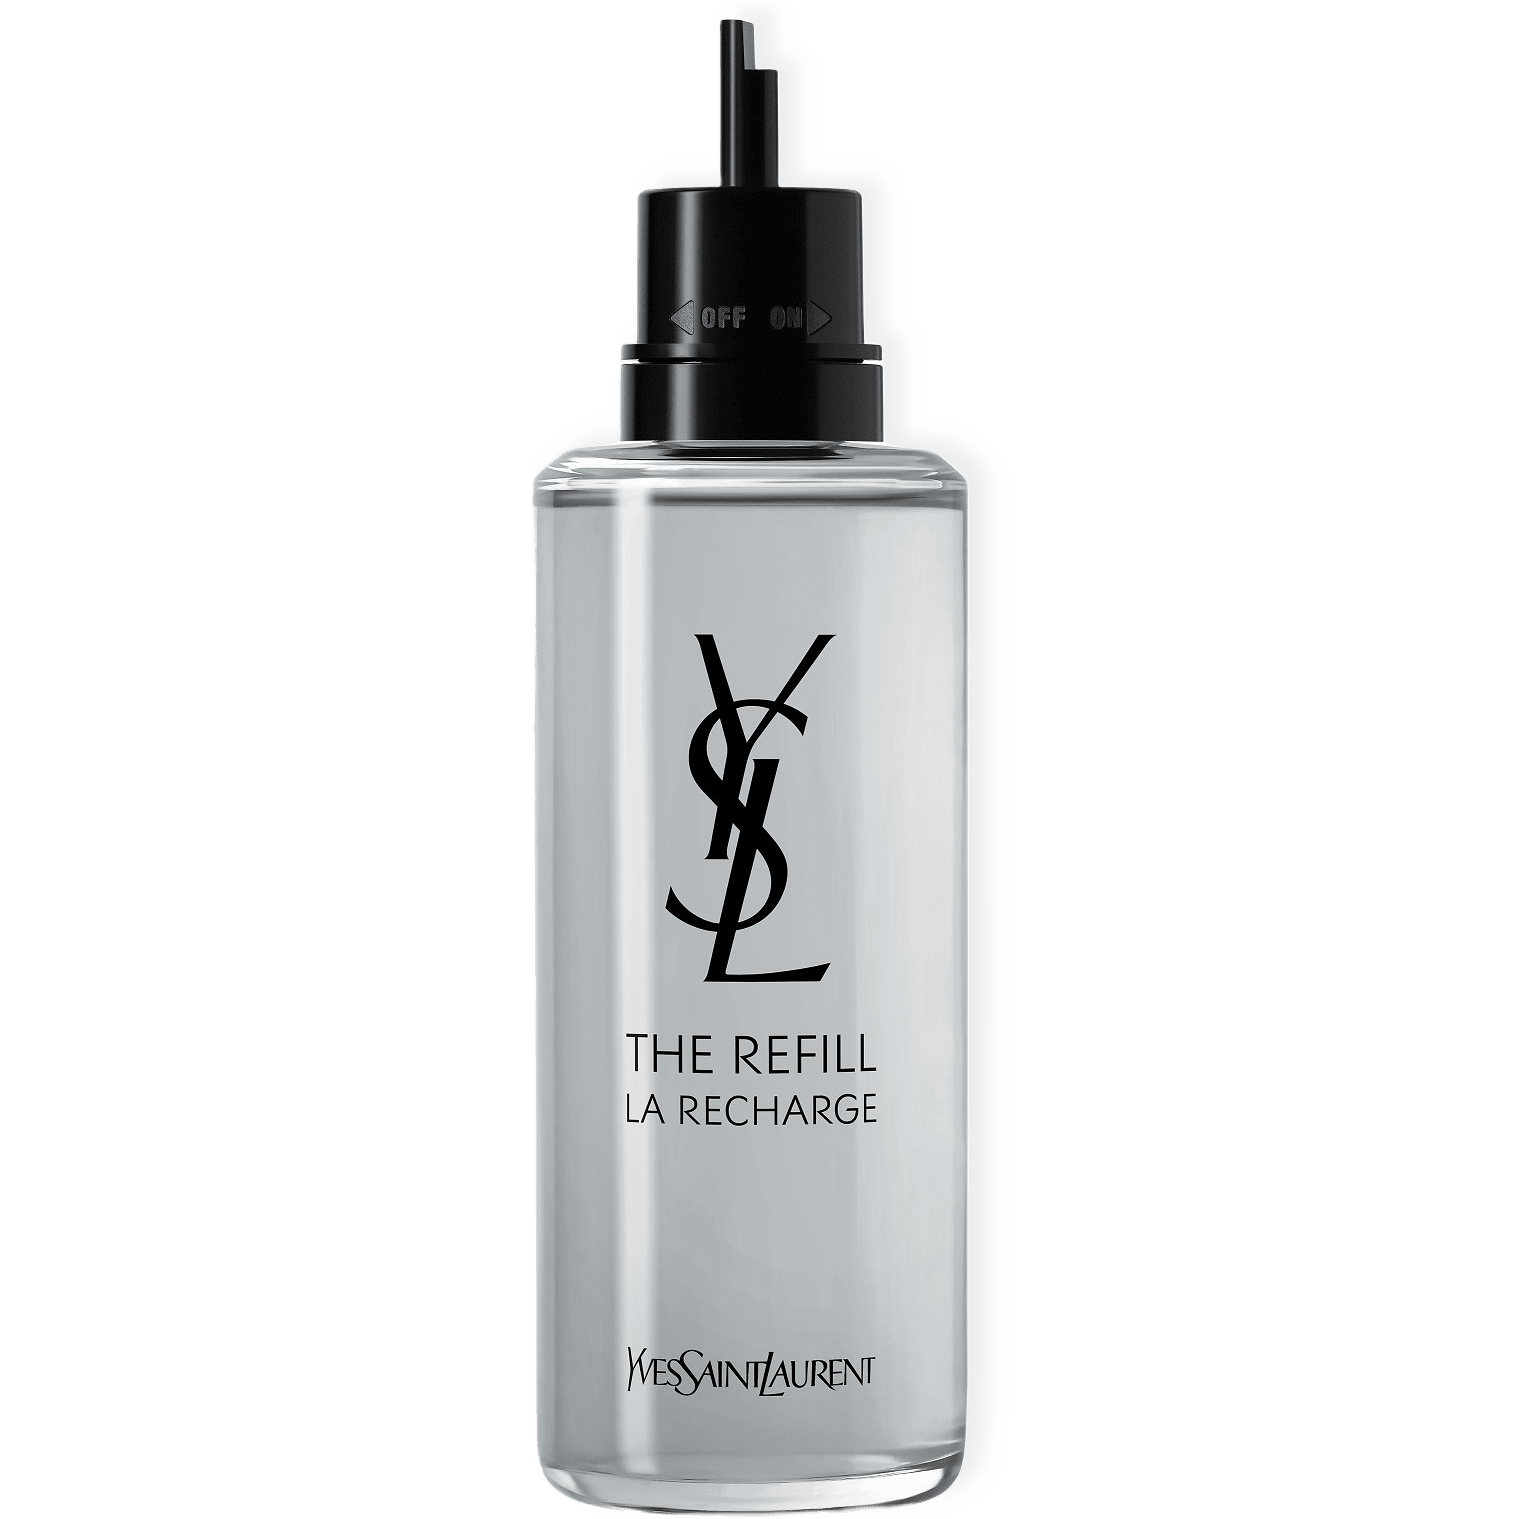 MYSLF Eau de Parfum Refill från Yves Saint Laurent